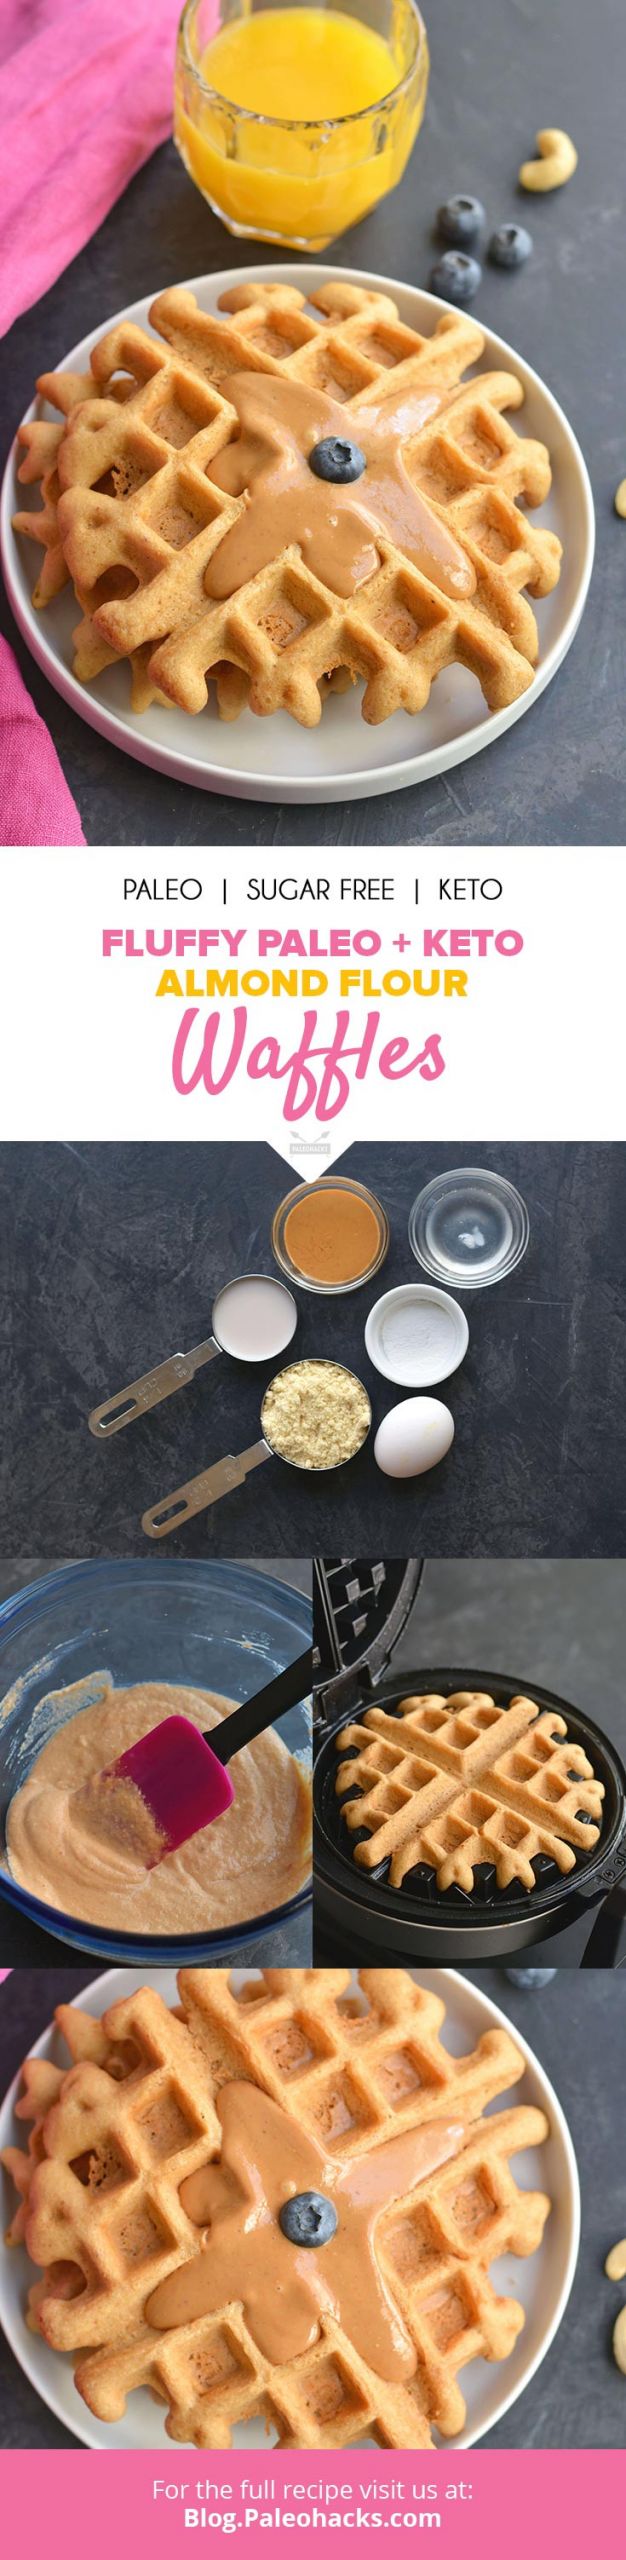 Keto Waffles Almond Flour
 Fluffy Paleo Keto Almond Flour Waffles